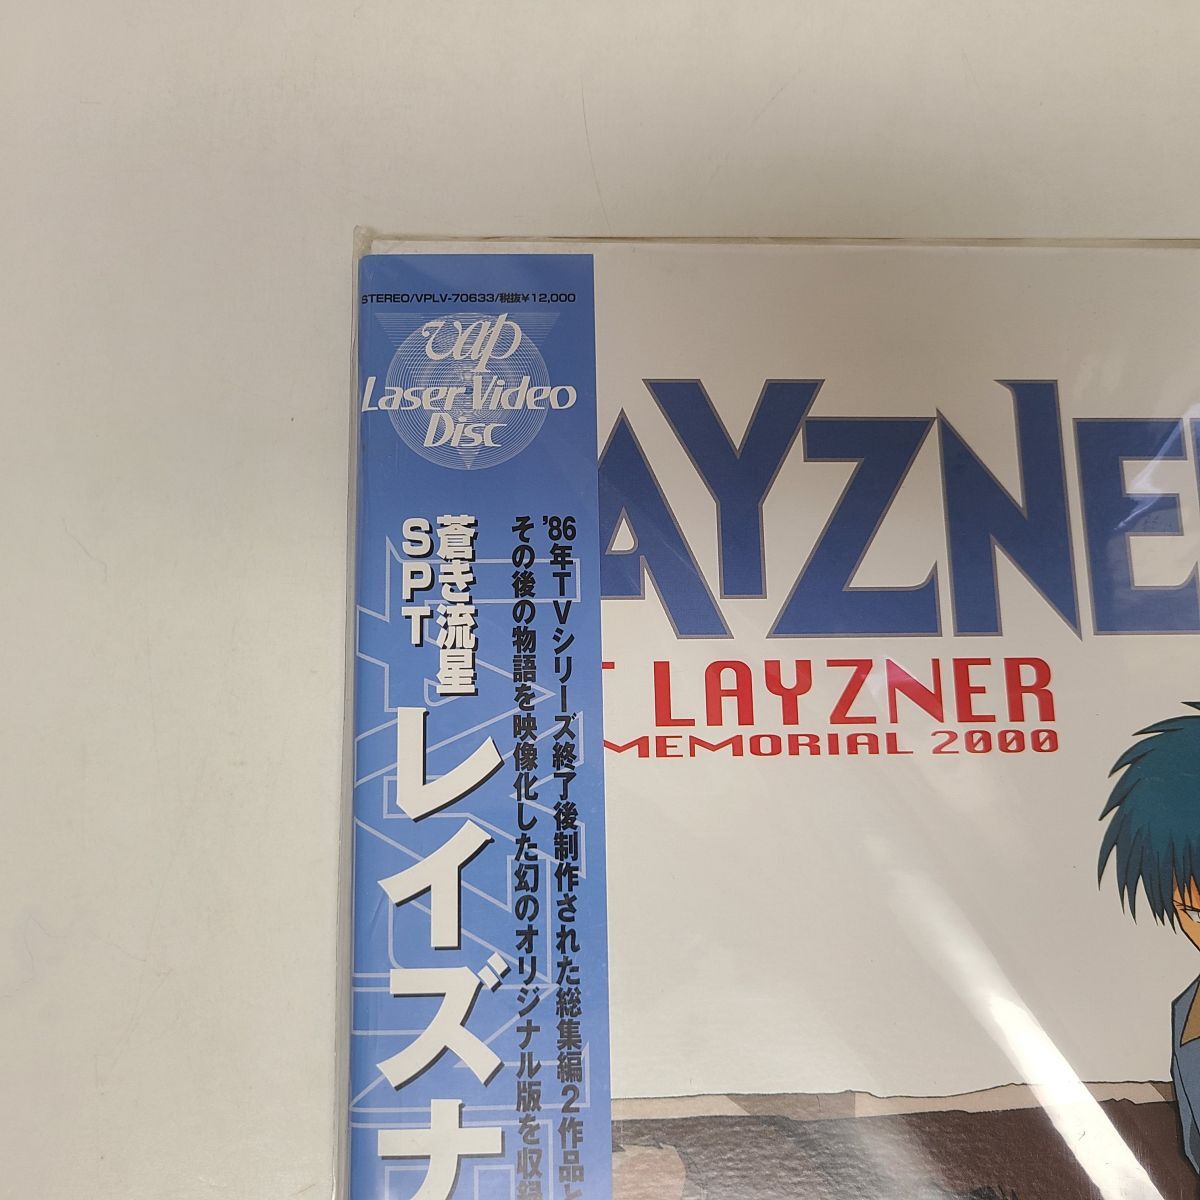  anime LD / Blue Comet SPT Layzner EIJI MEMORIAL 2000 /bap/ unused / obi attaching / VPLV-70633[M005]